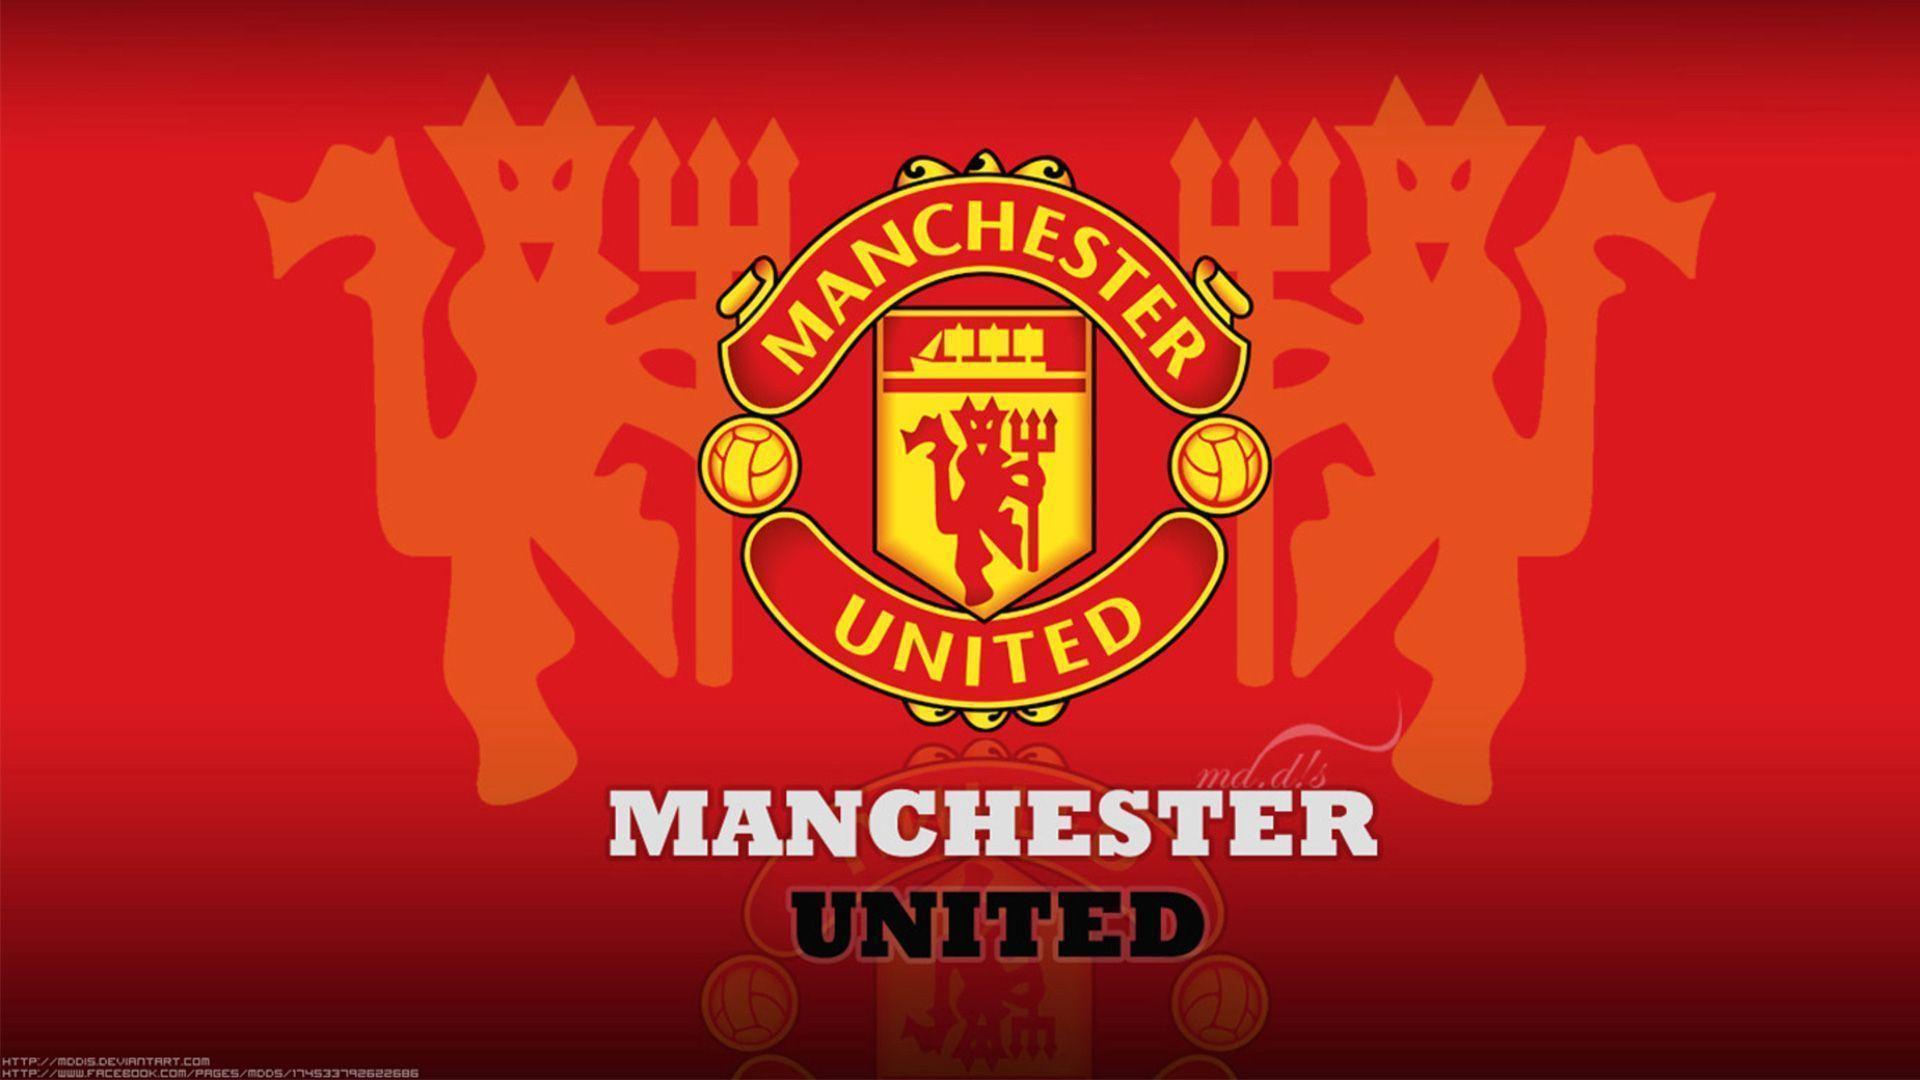 Manchester United 2015 2016 Wallpaper IPhone, Sports Wallpaper